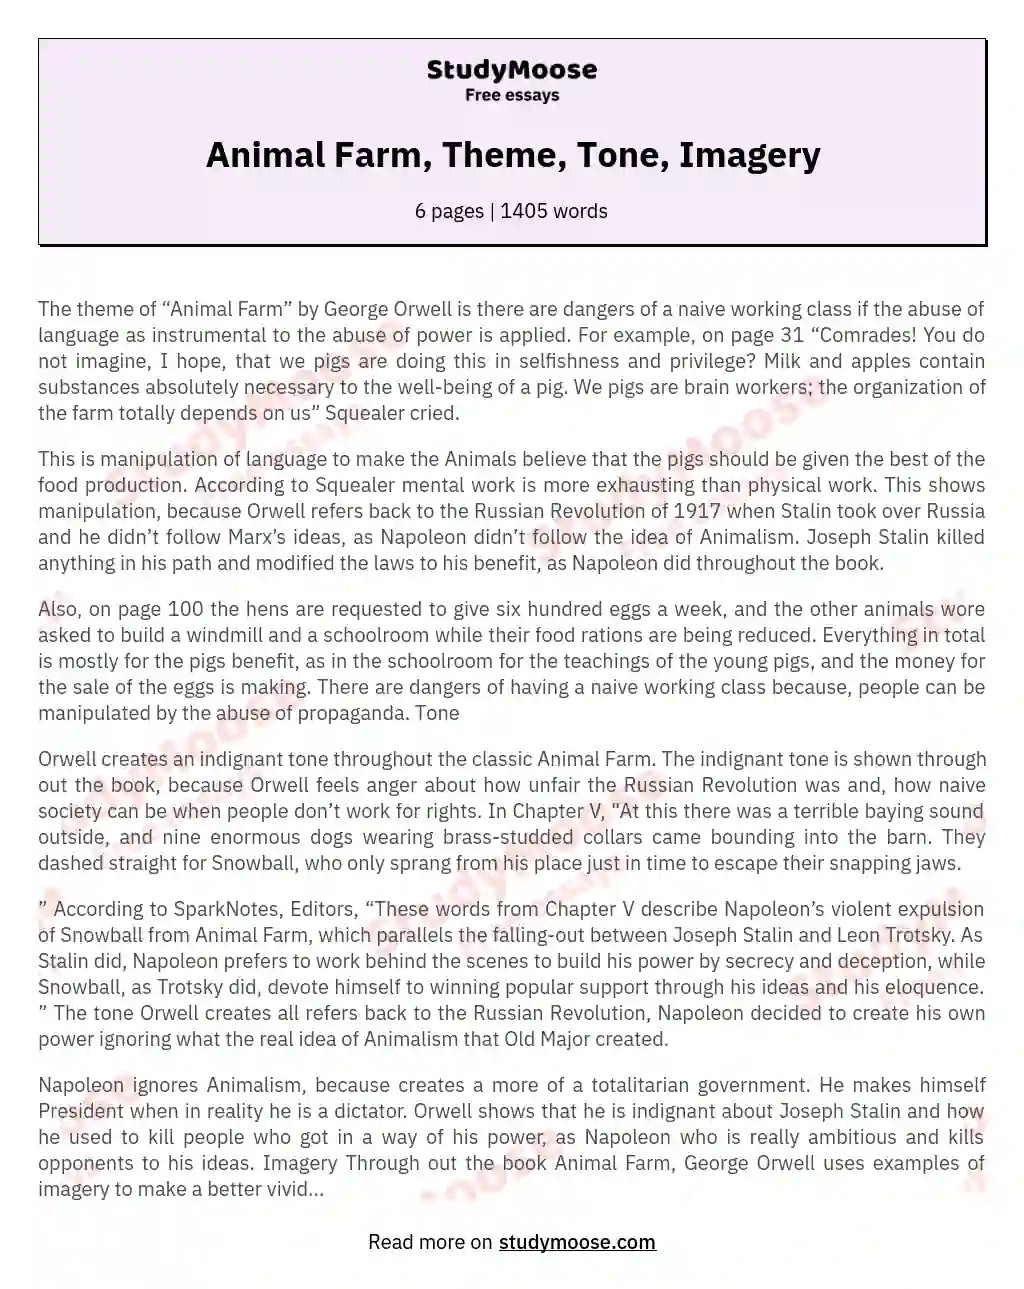 Animal Farm, Theme, Tone, Imagery Free Essay Example